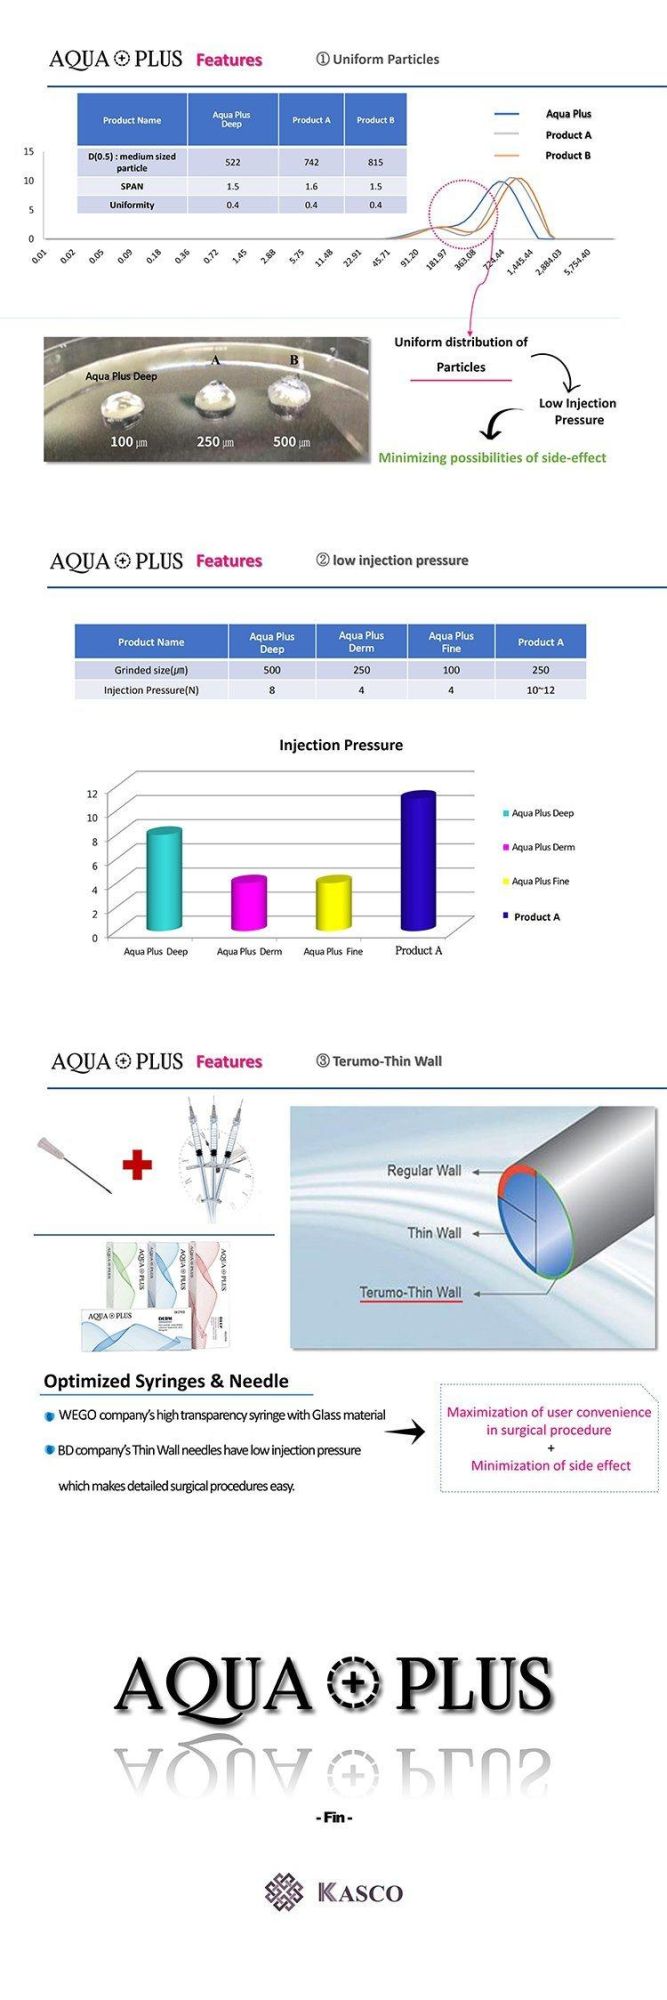 Aqua Plus 24mg Stabilized Ha Dermal Fillers Lip Fullness Non Animal Bdde Injectable Hyaluronic Acid